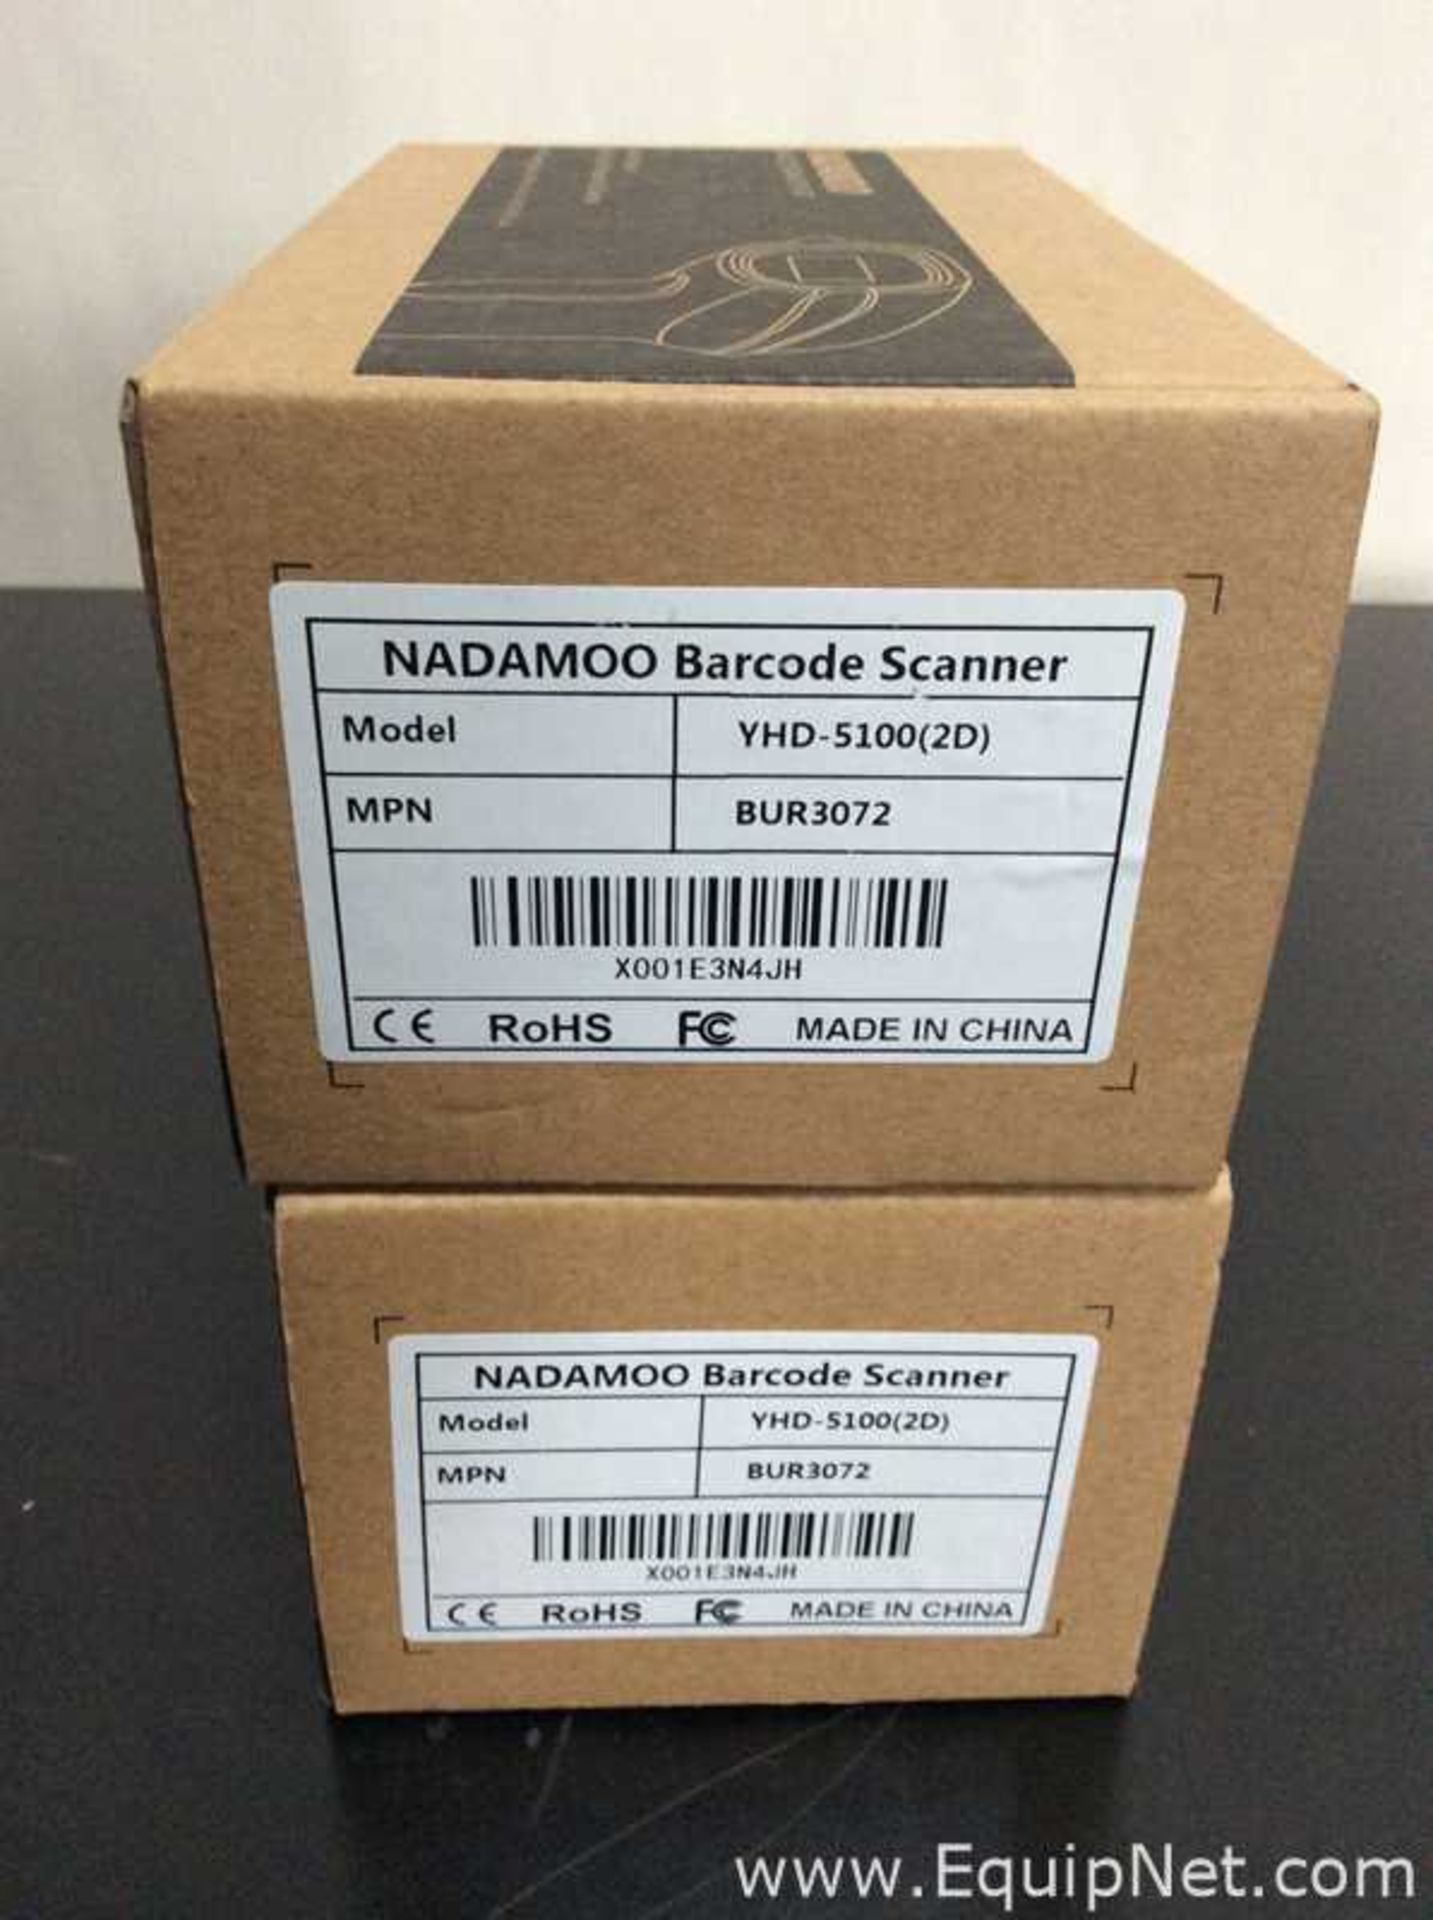 Lot of 3 Nadamoo YHD-5100 Barcode Scanners - Image 4 of 4